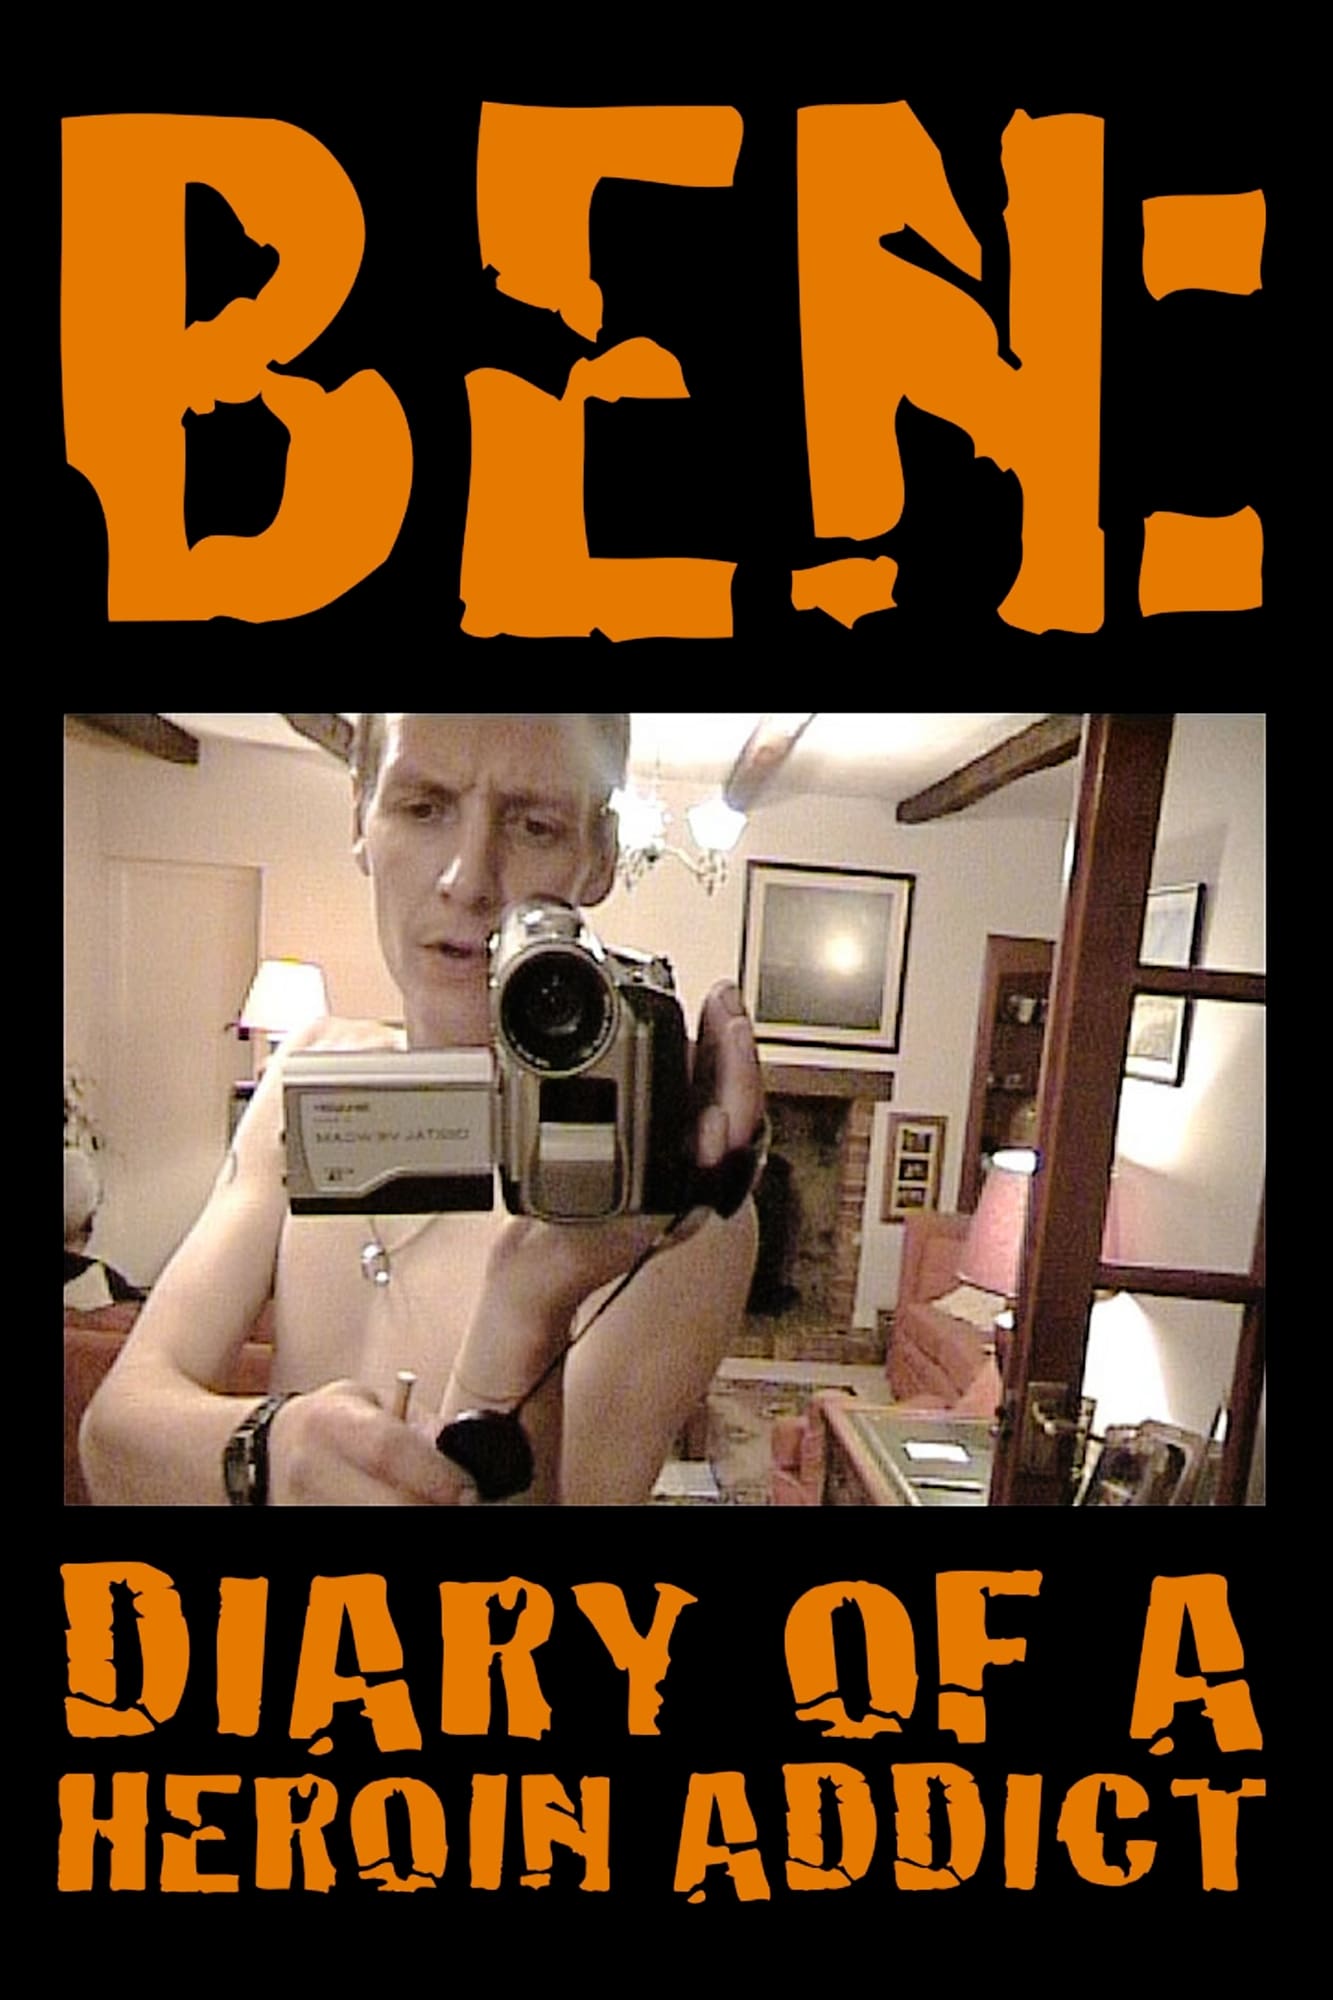 Ben: Diary of a Heroin Addict